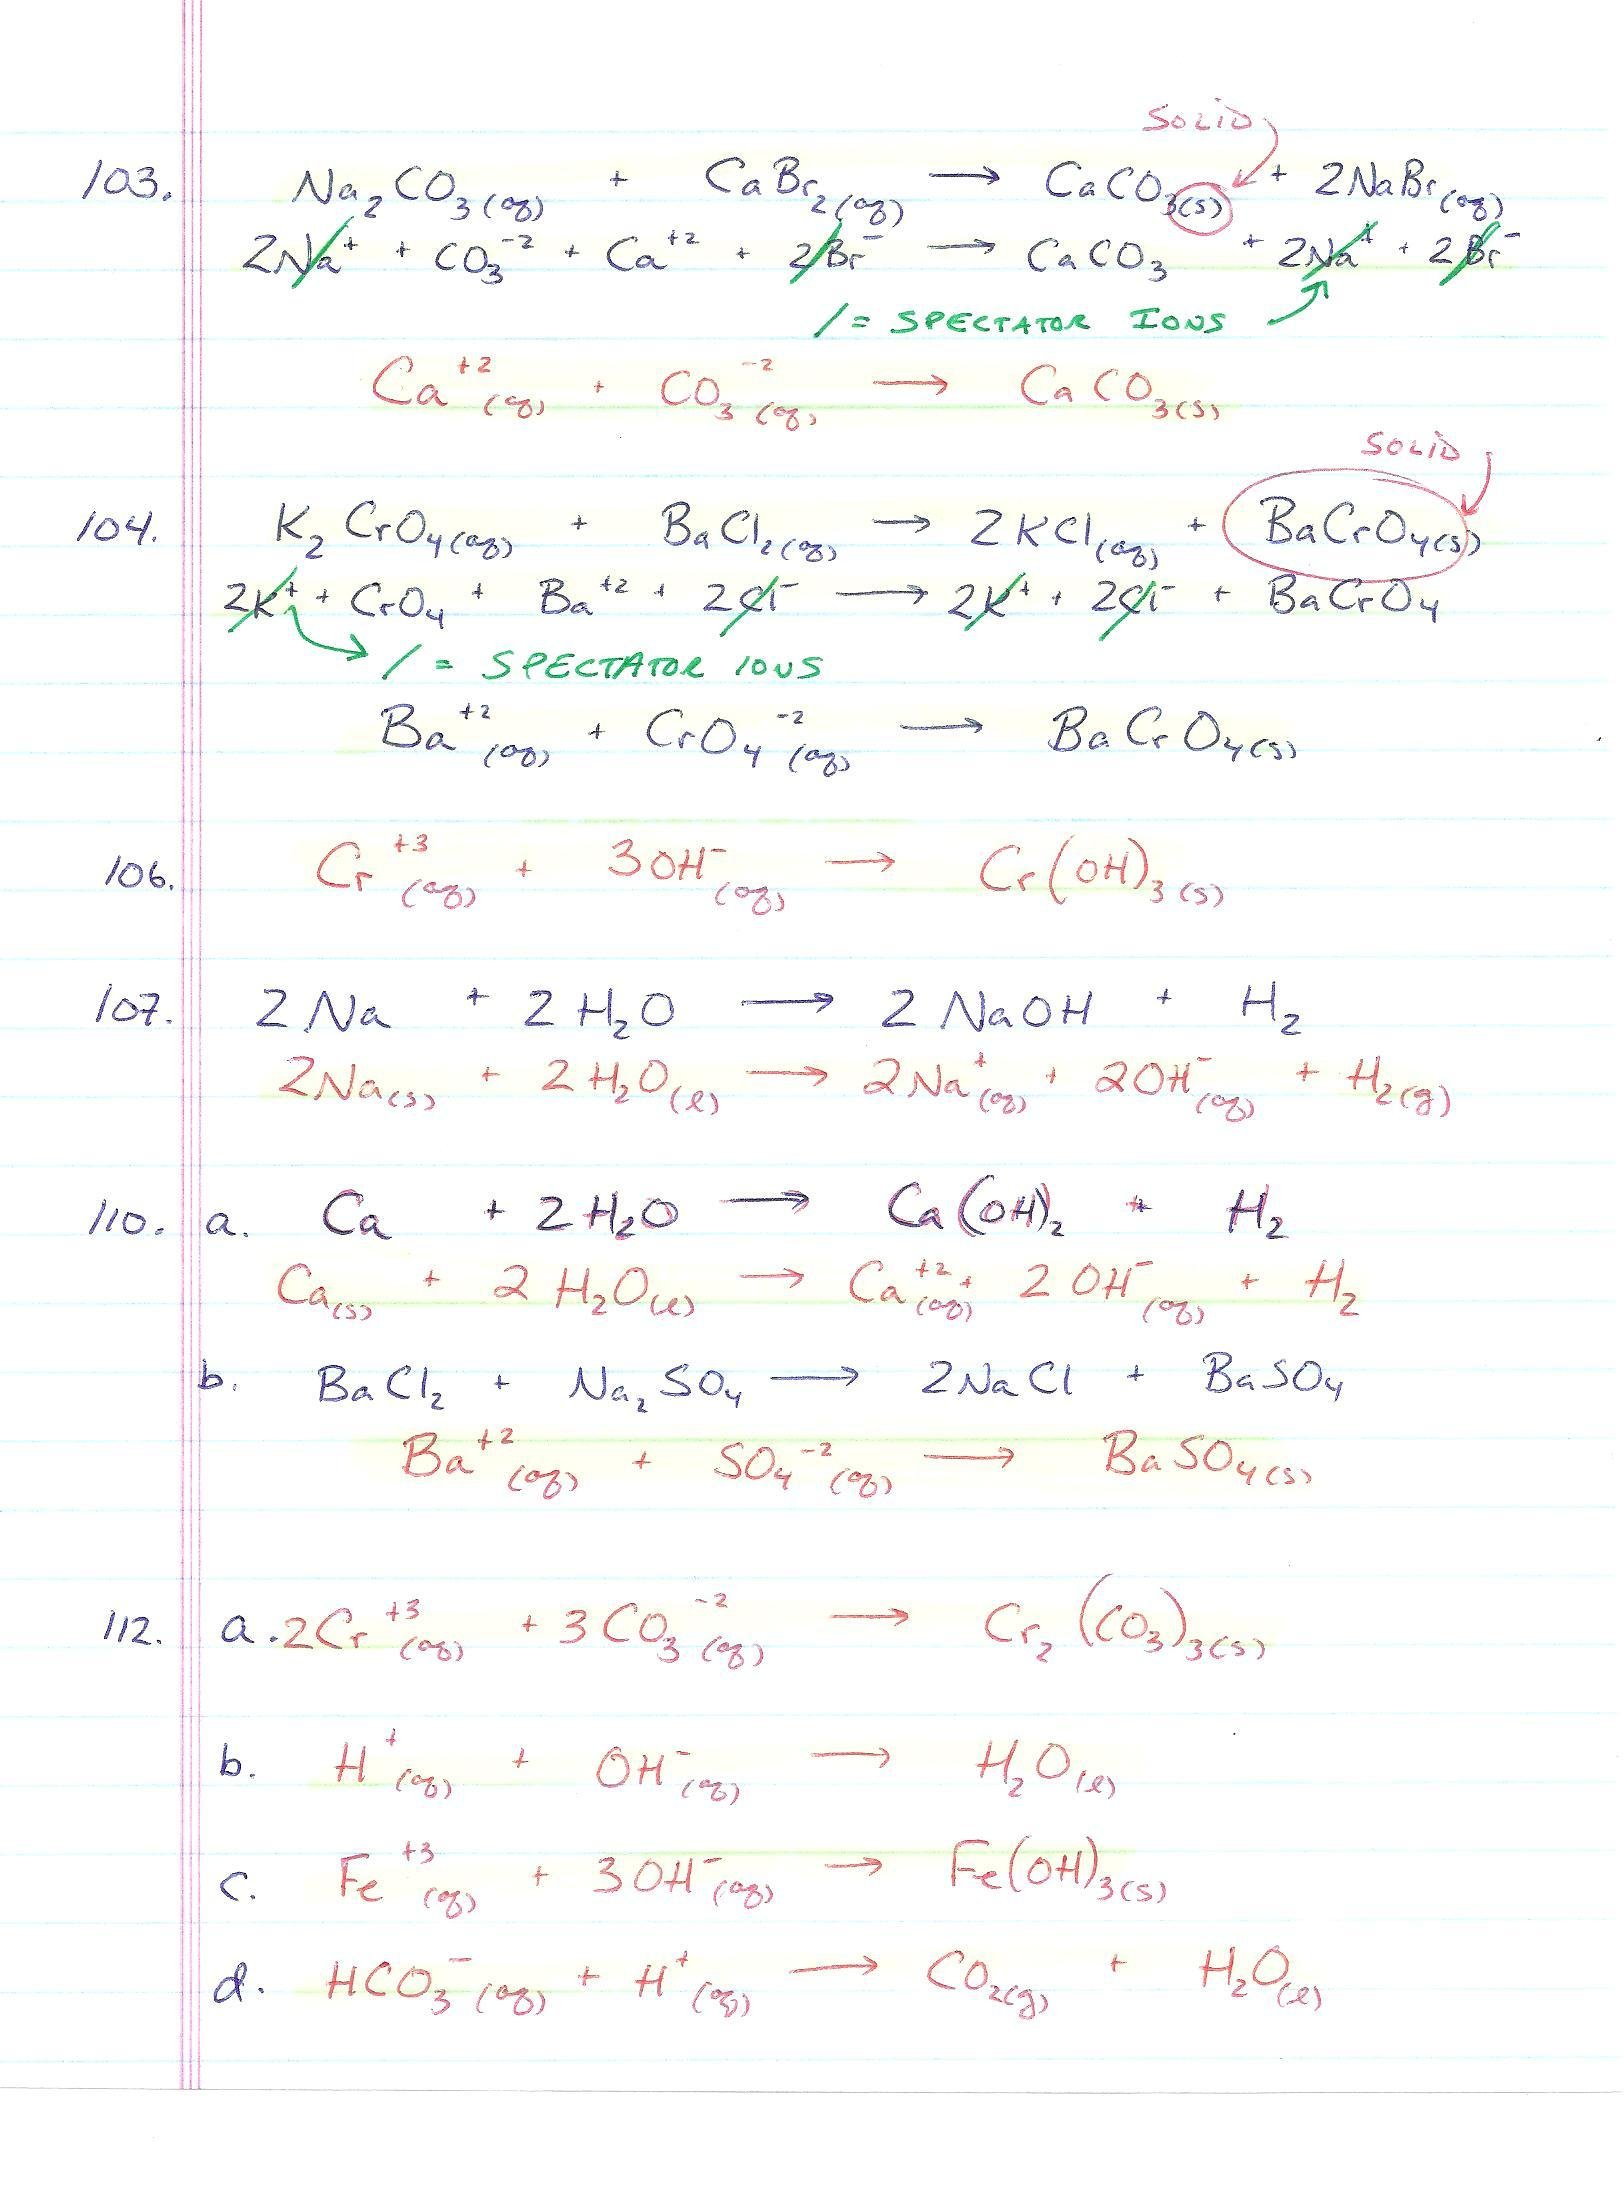 Worksheet Net Ionic Equation Worksheet Answers Worksheet  Home Design And Net Ionic Equations Advanced Chem Worksheet 10 4 Answers